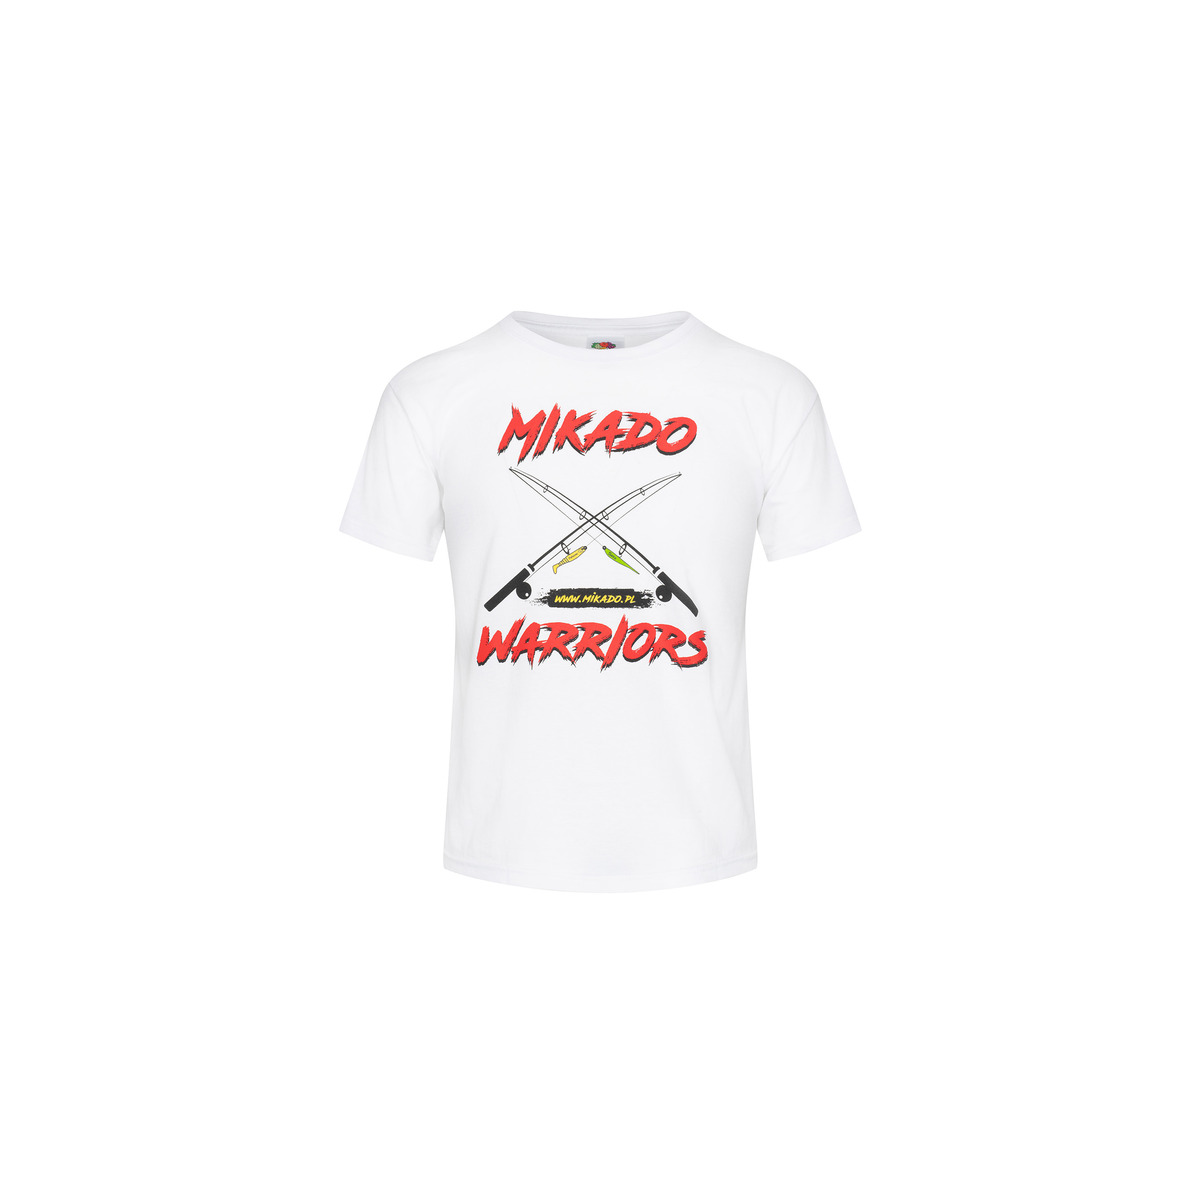 Mikado Tshirt With Overprint - KIDS WARRIORS  size 140  WHITE